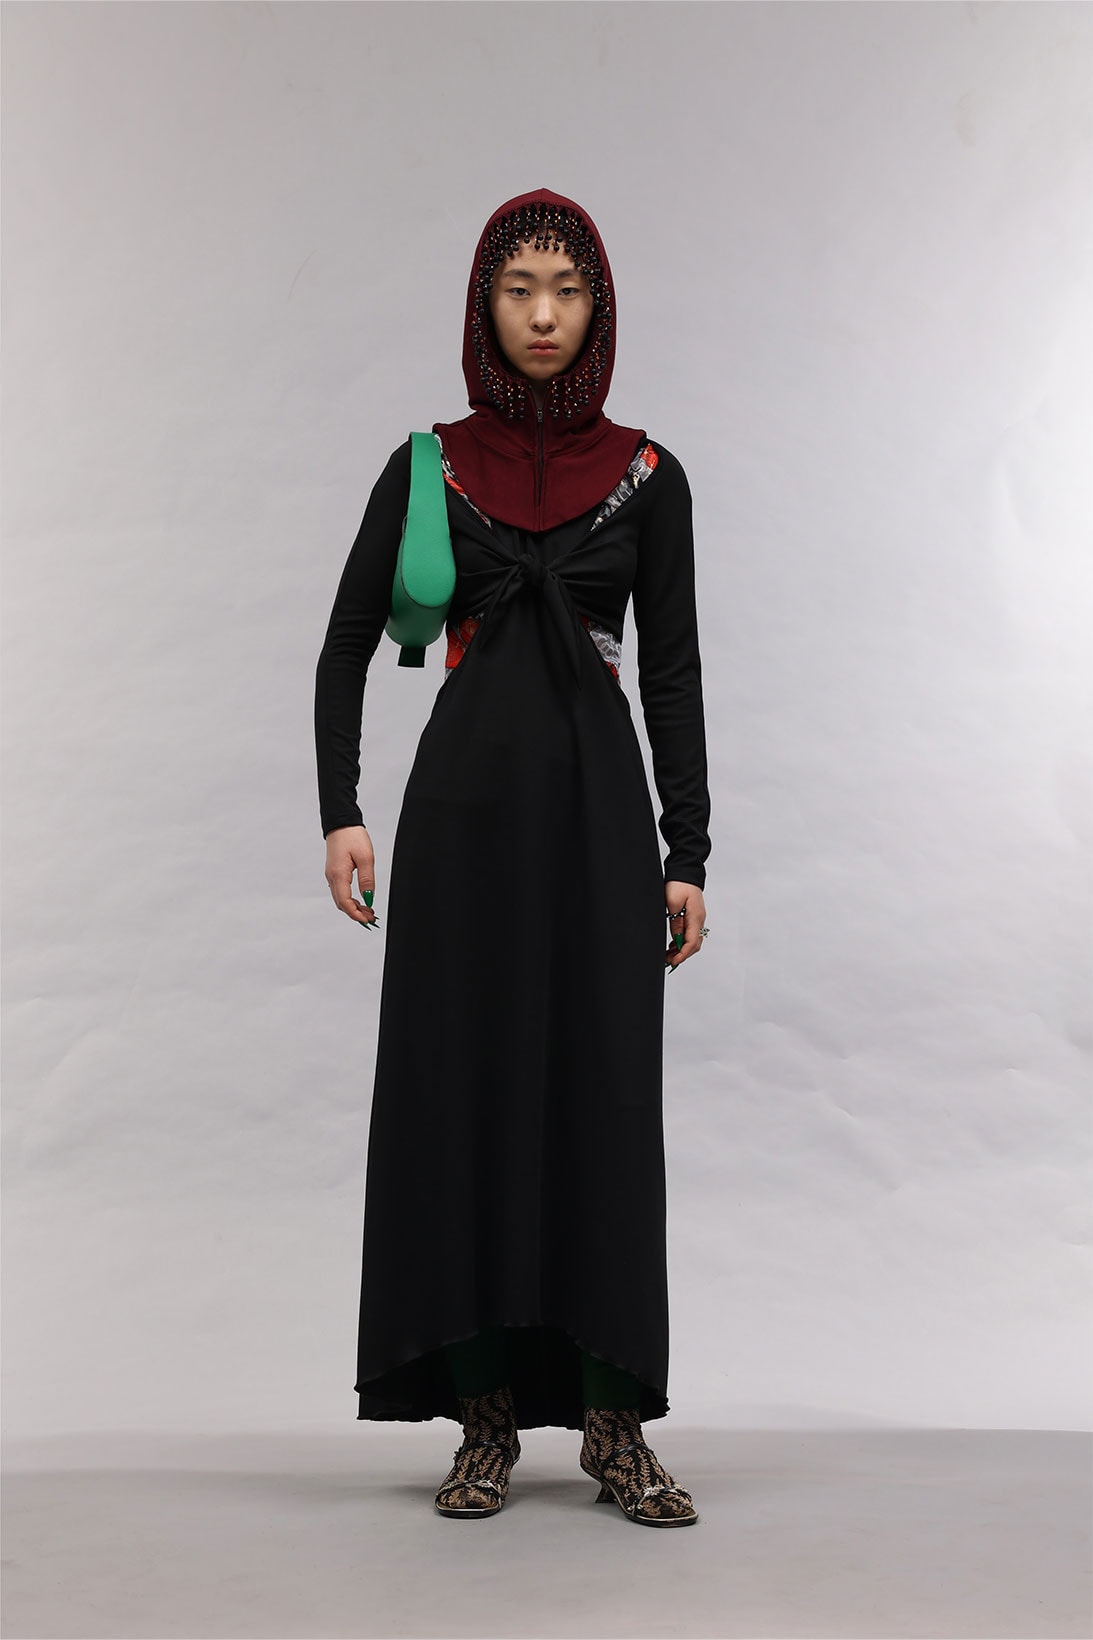 J. Kim Fall Winter Collection Emerging Designer Uzbekistan Korean Images Release